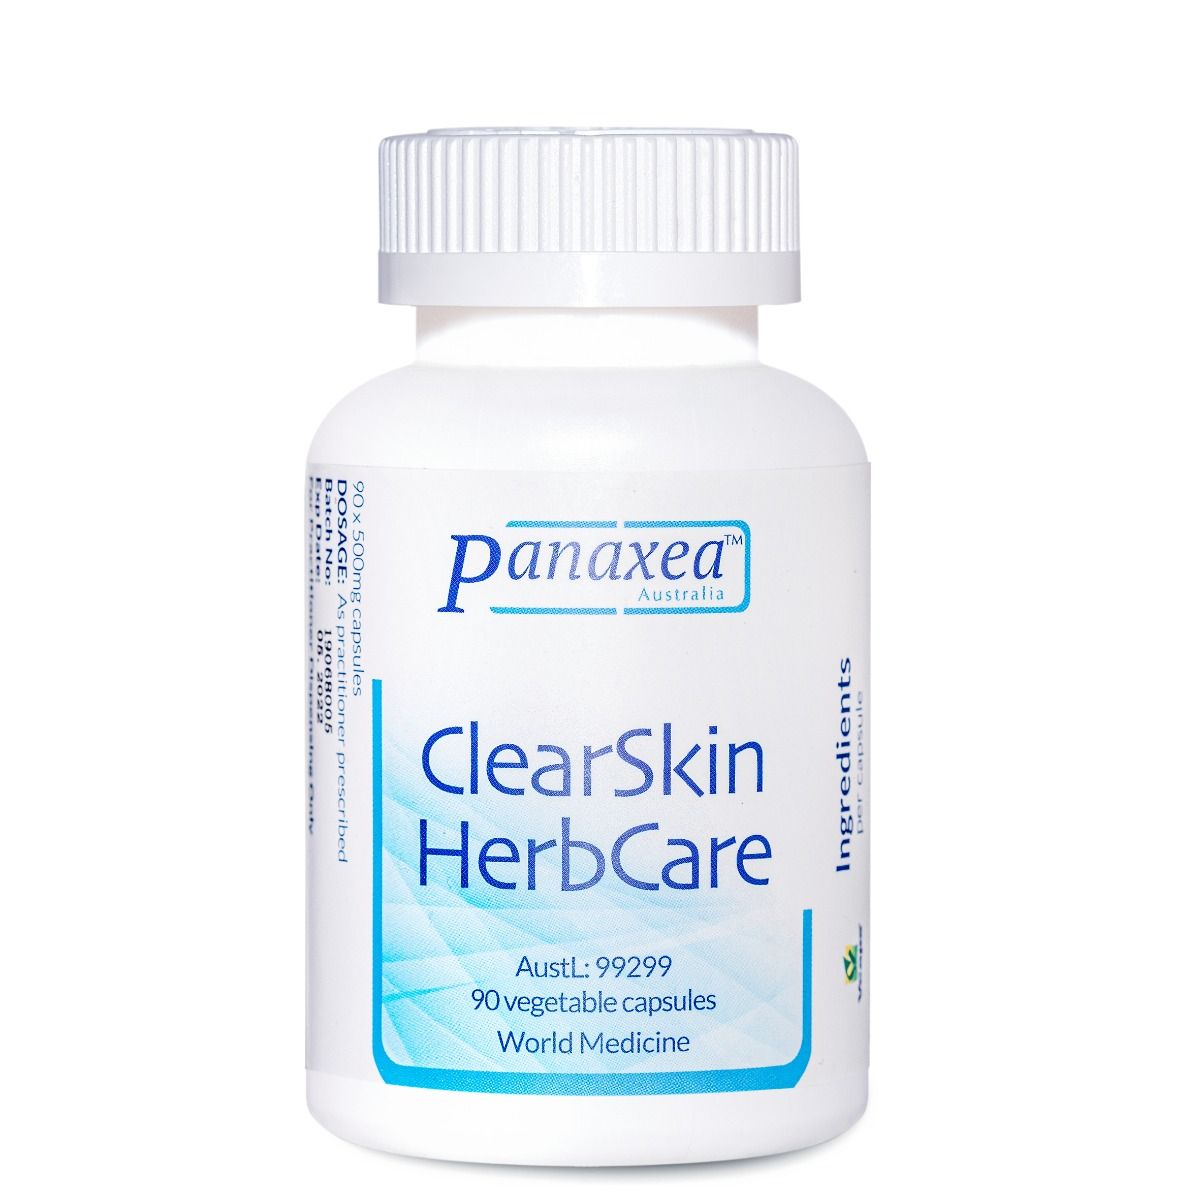 CleanSkin HerbCare